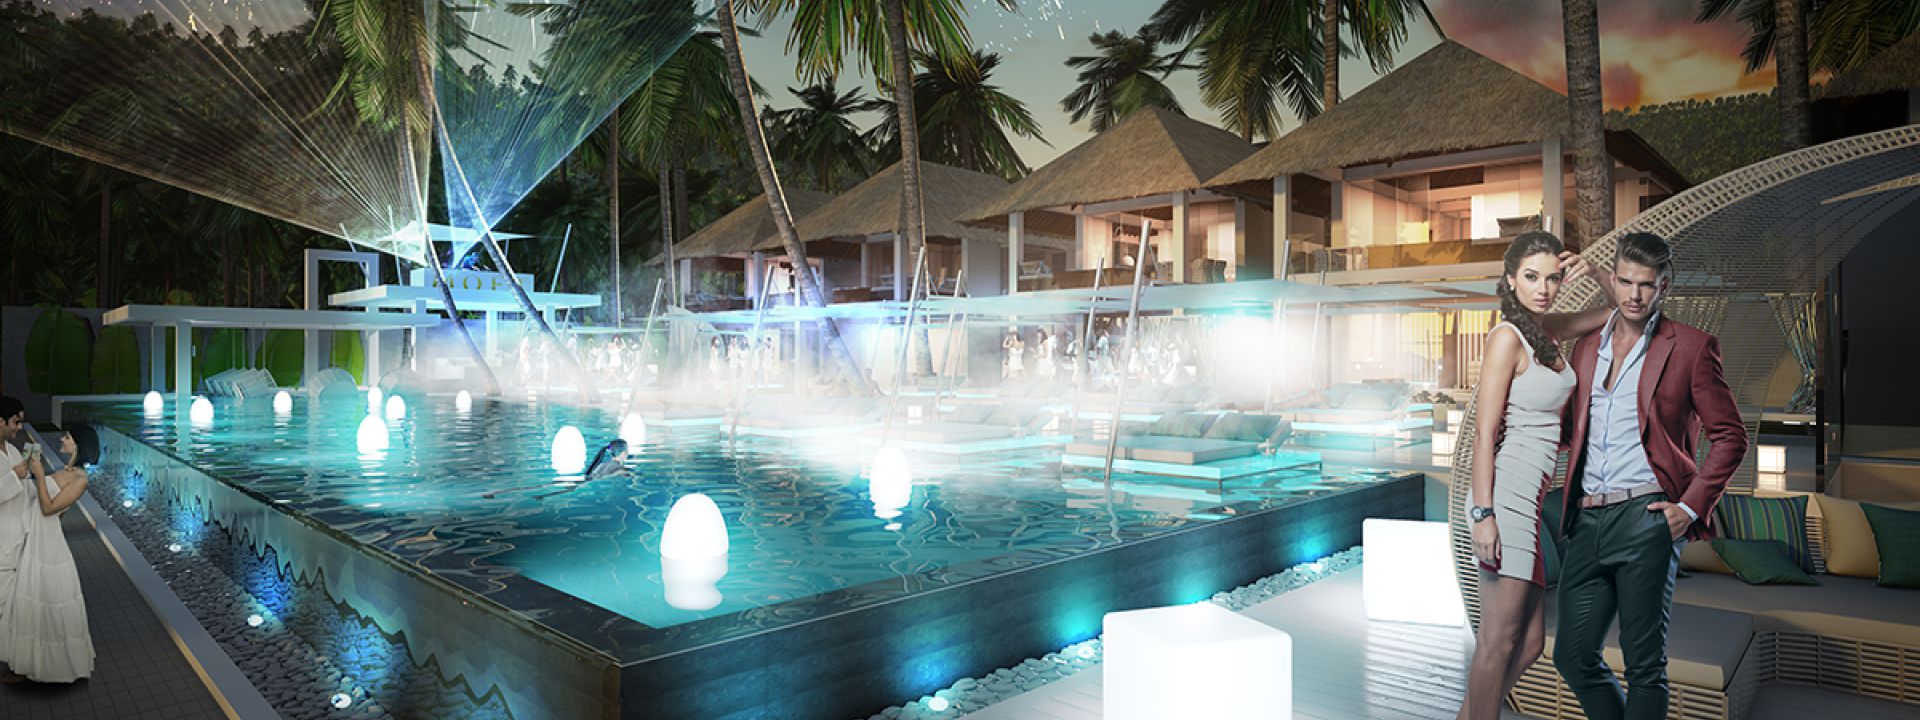 7 Secrets Resort & Wellness Retreat , Michelin starred - Lombok / Indonesia  